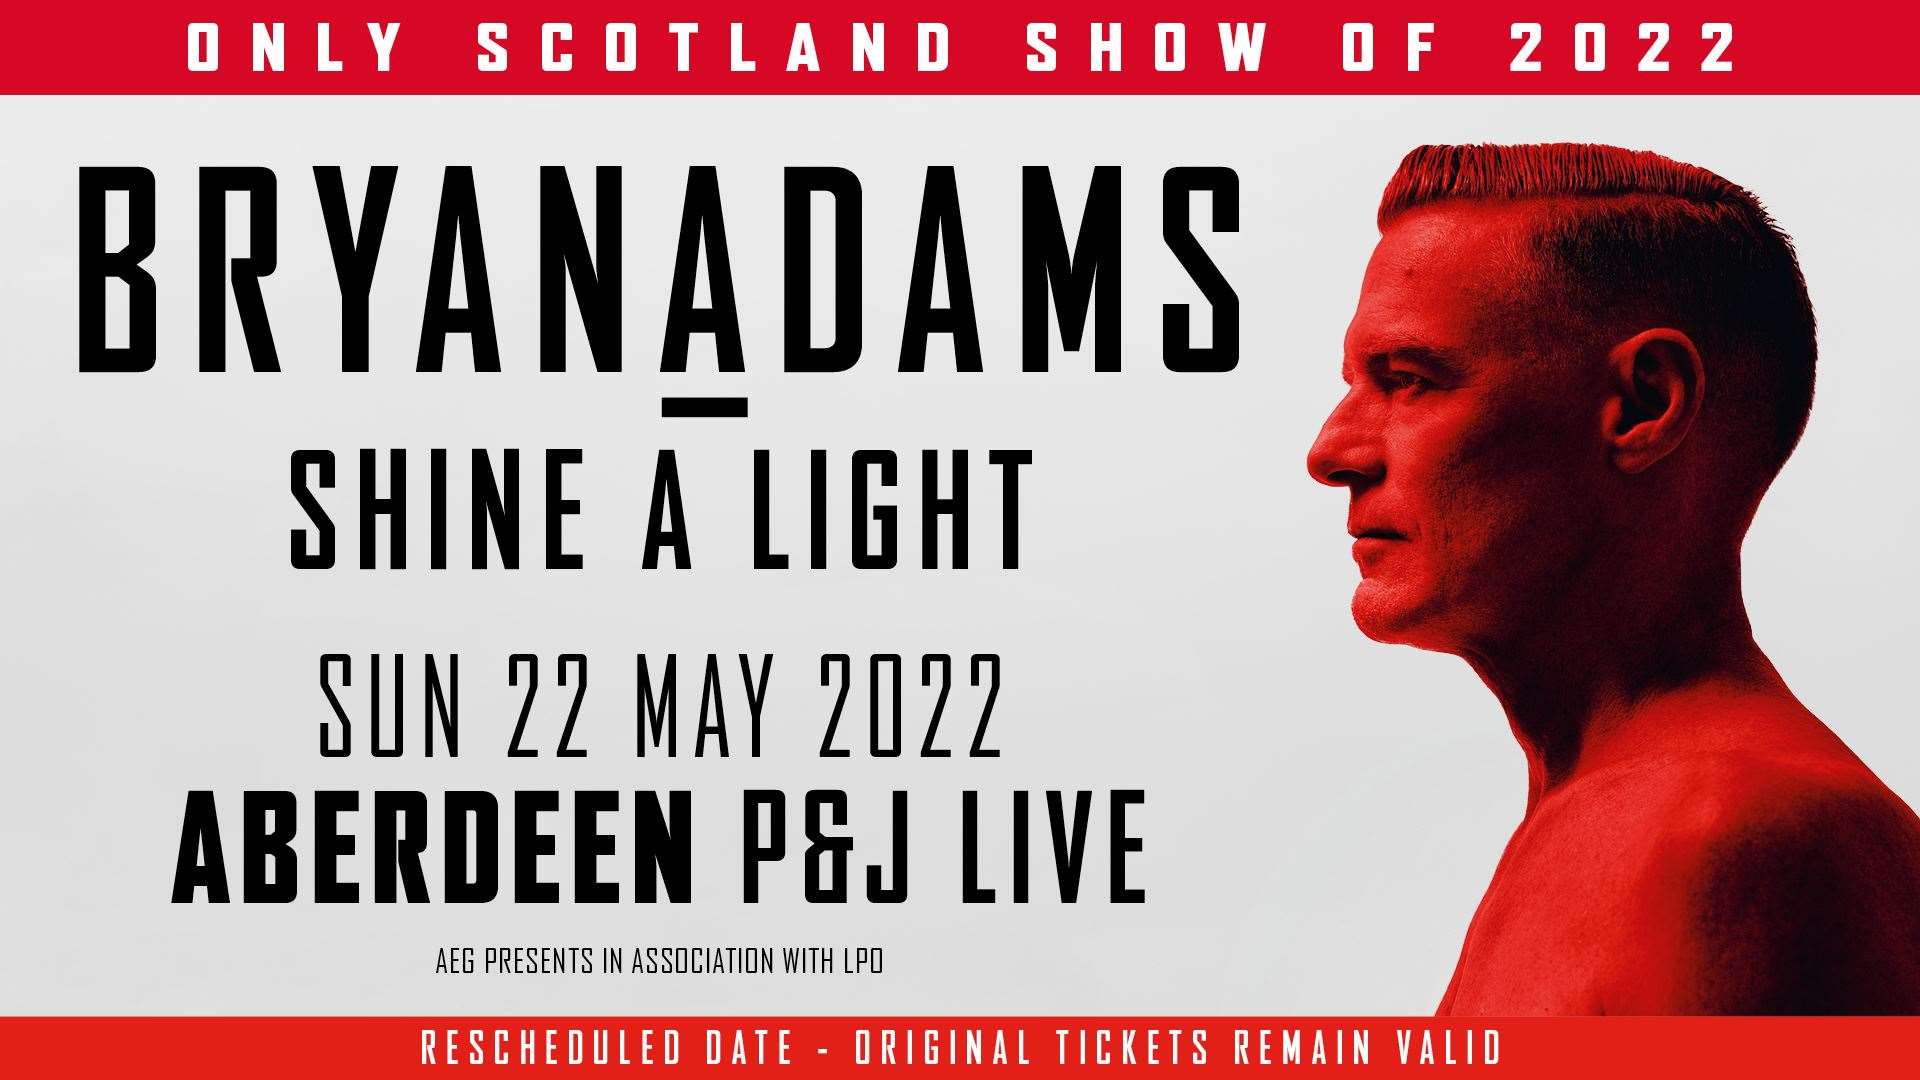 Bryan Adams latest tour has rescheduled dates